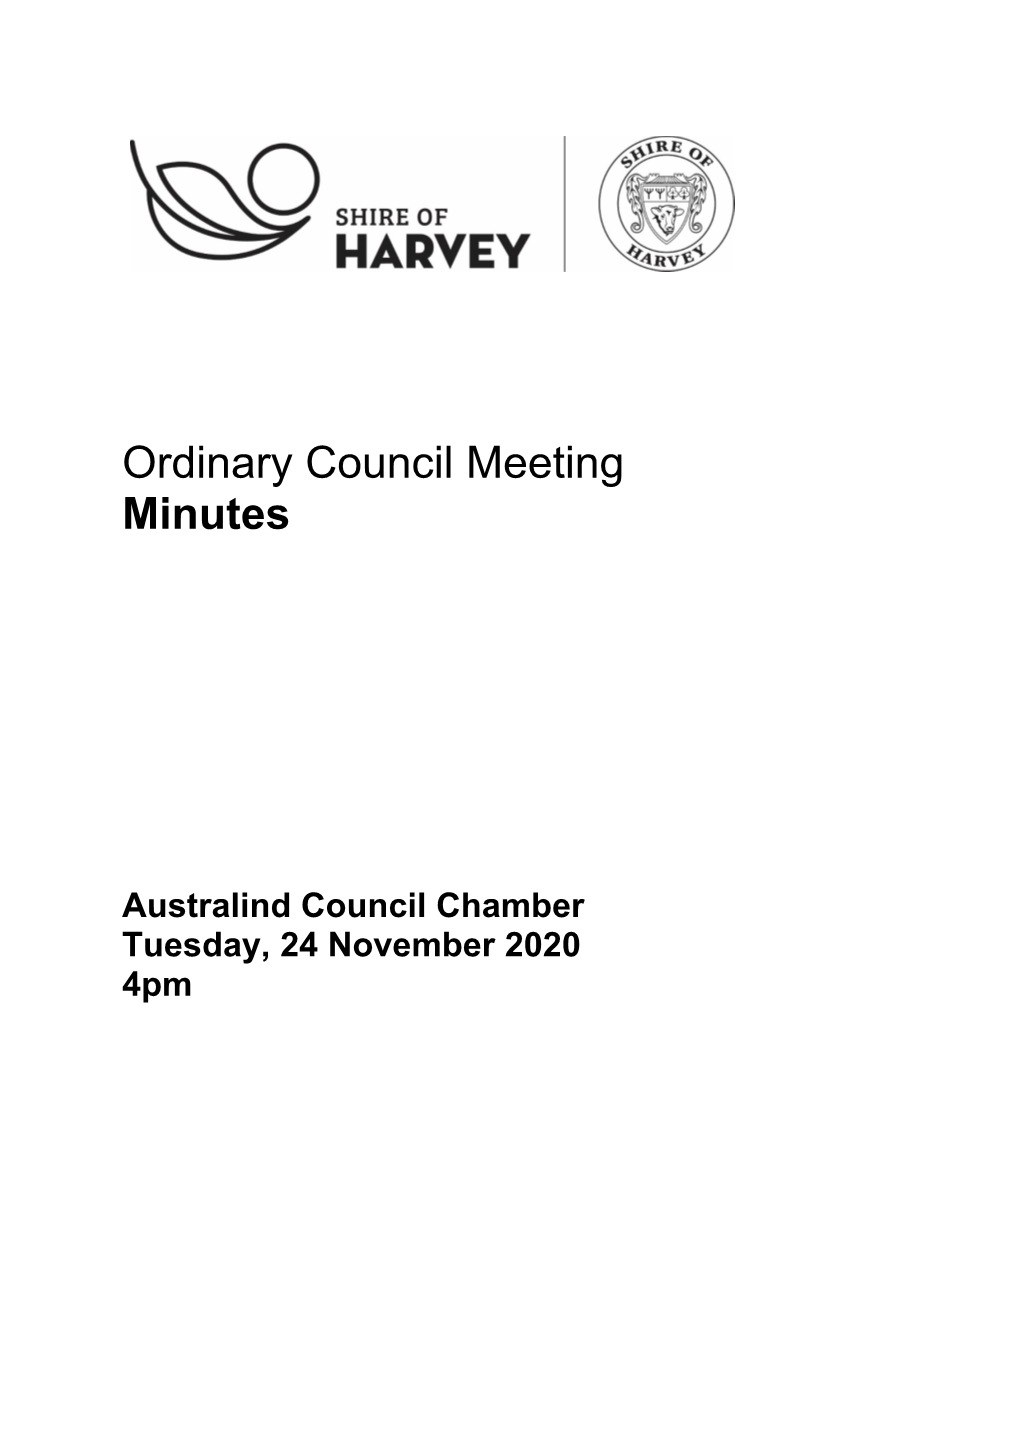 Ordinary Council Confirmed Minutes November 2020